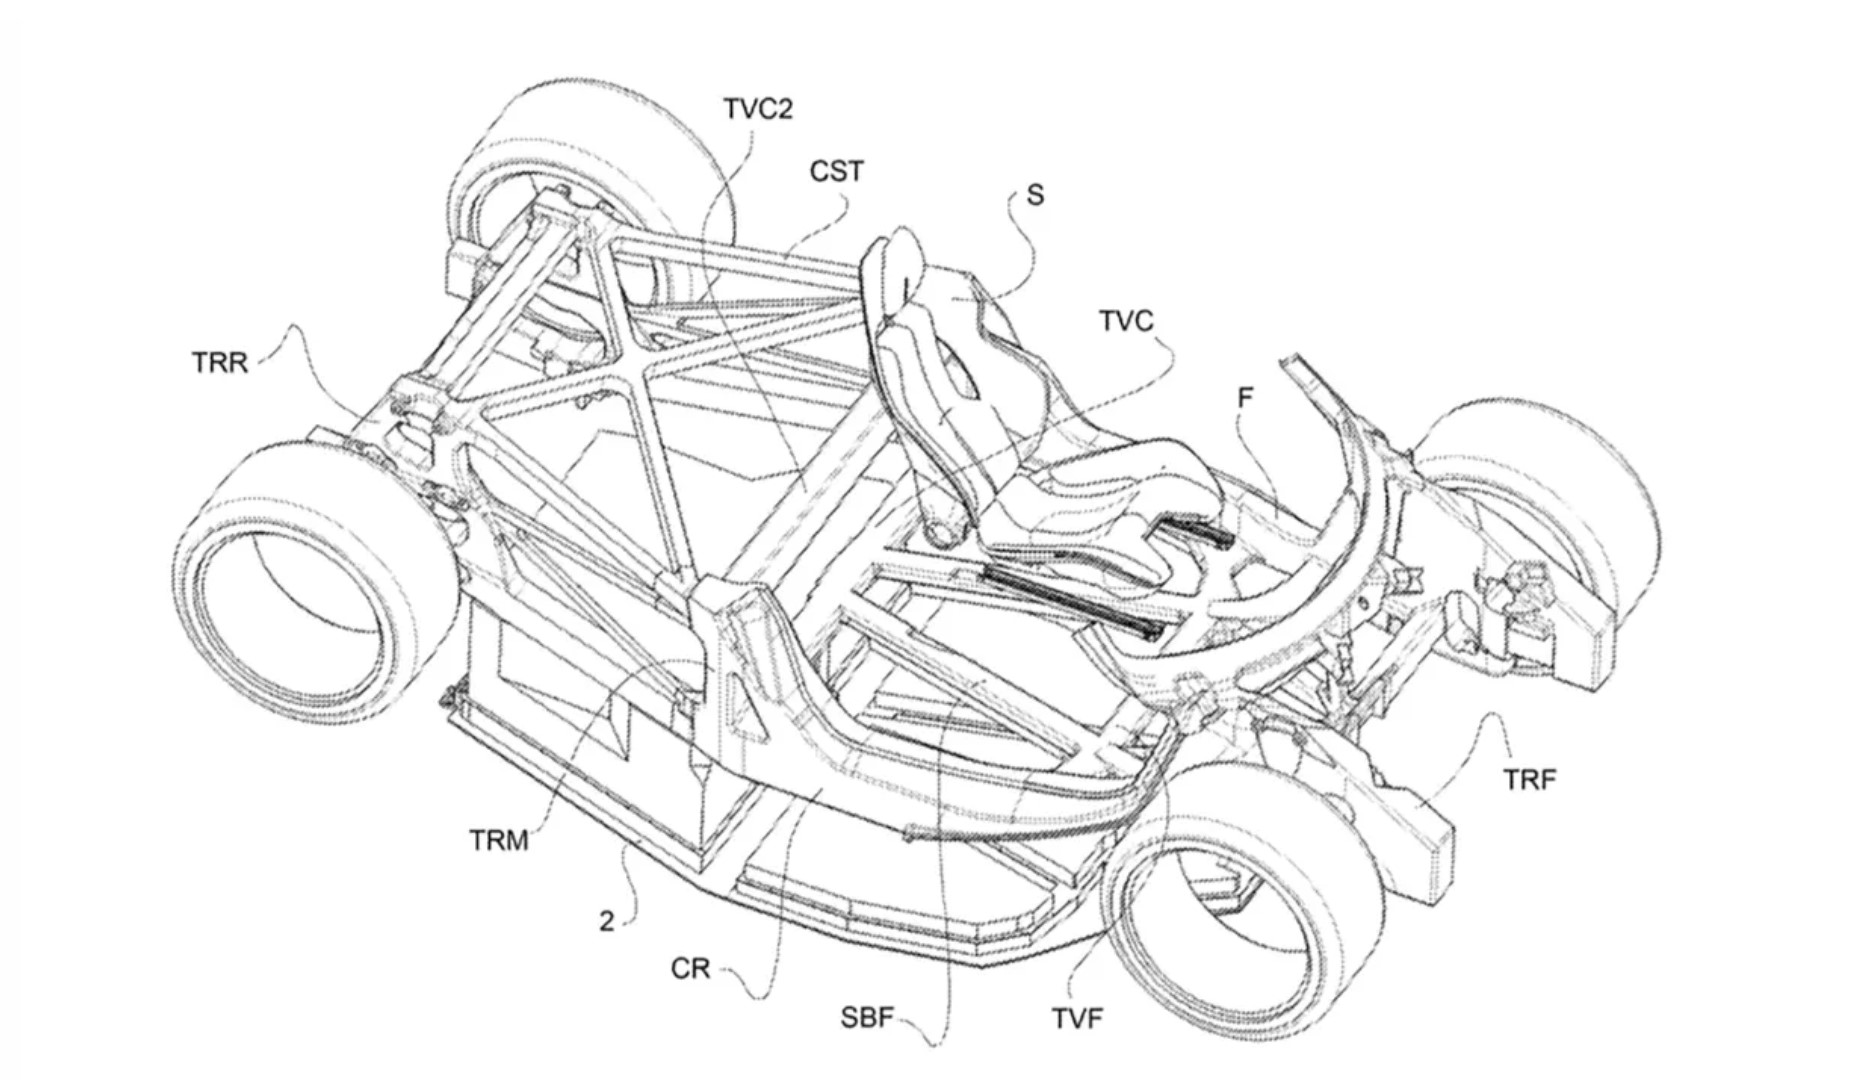 Ferrari electric patent drawing 3